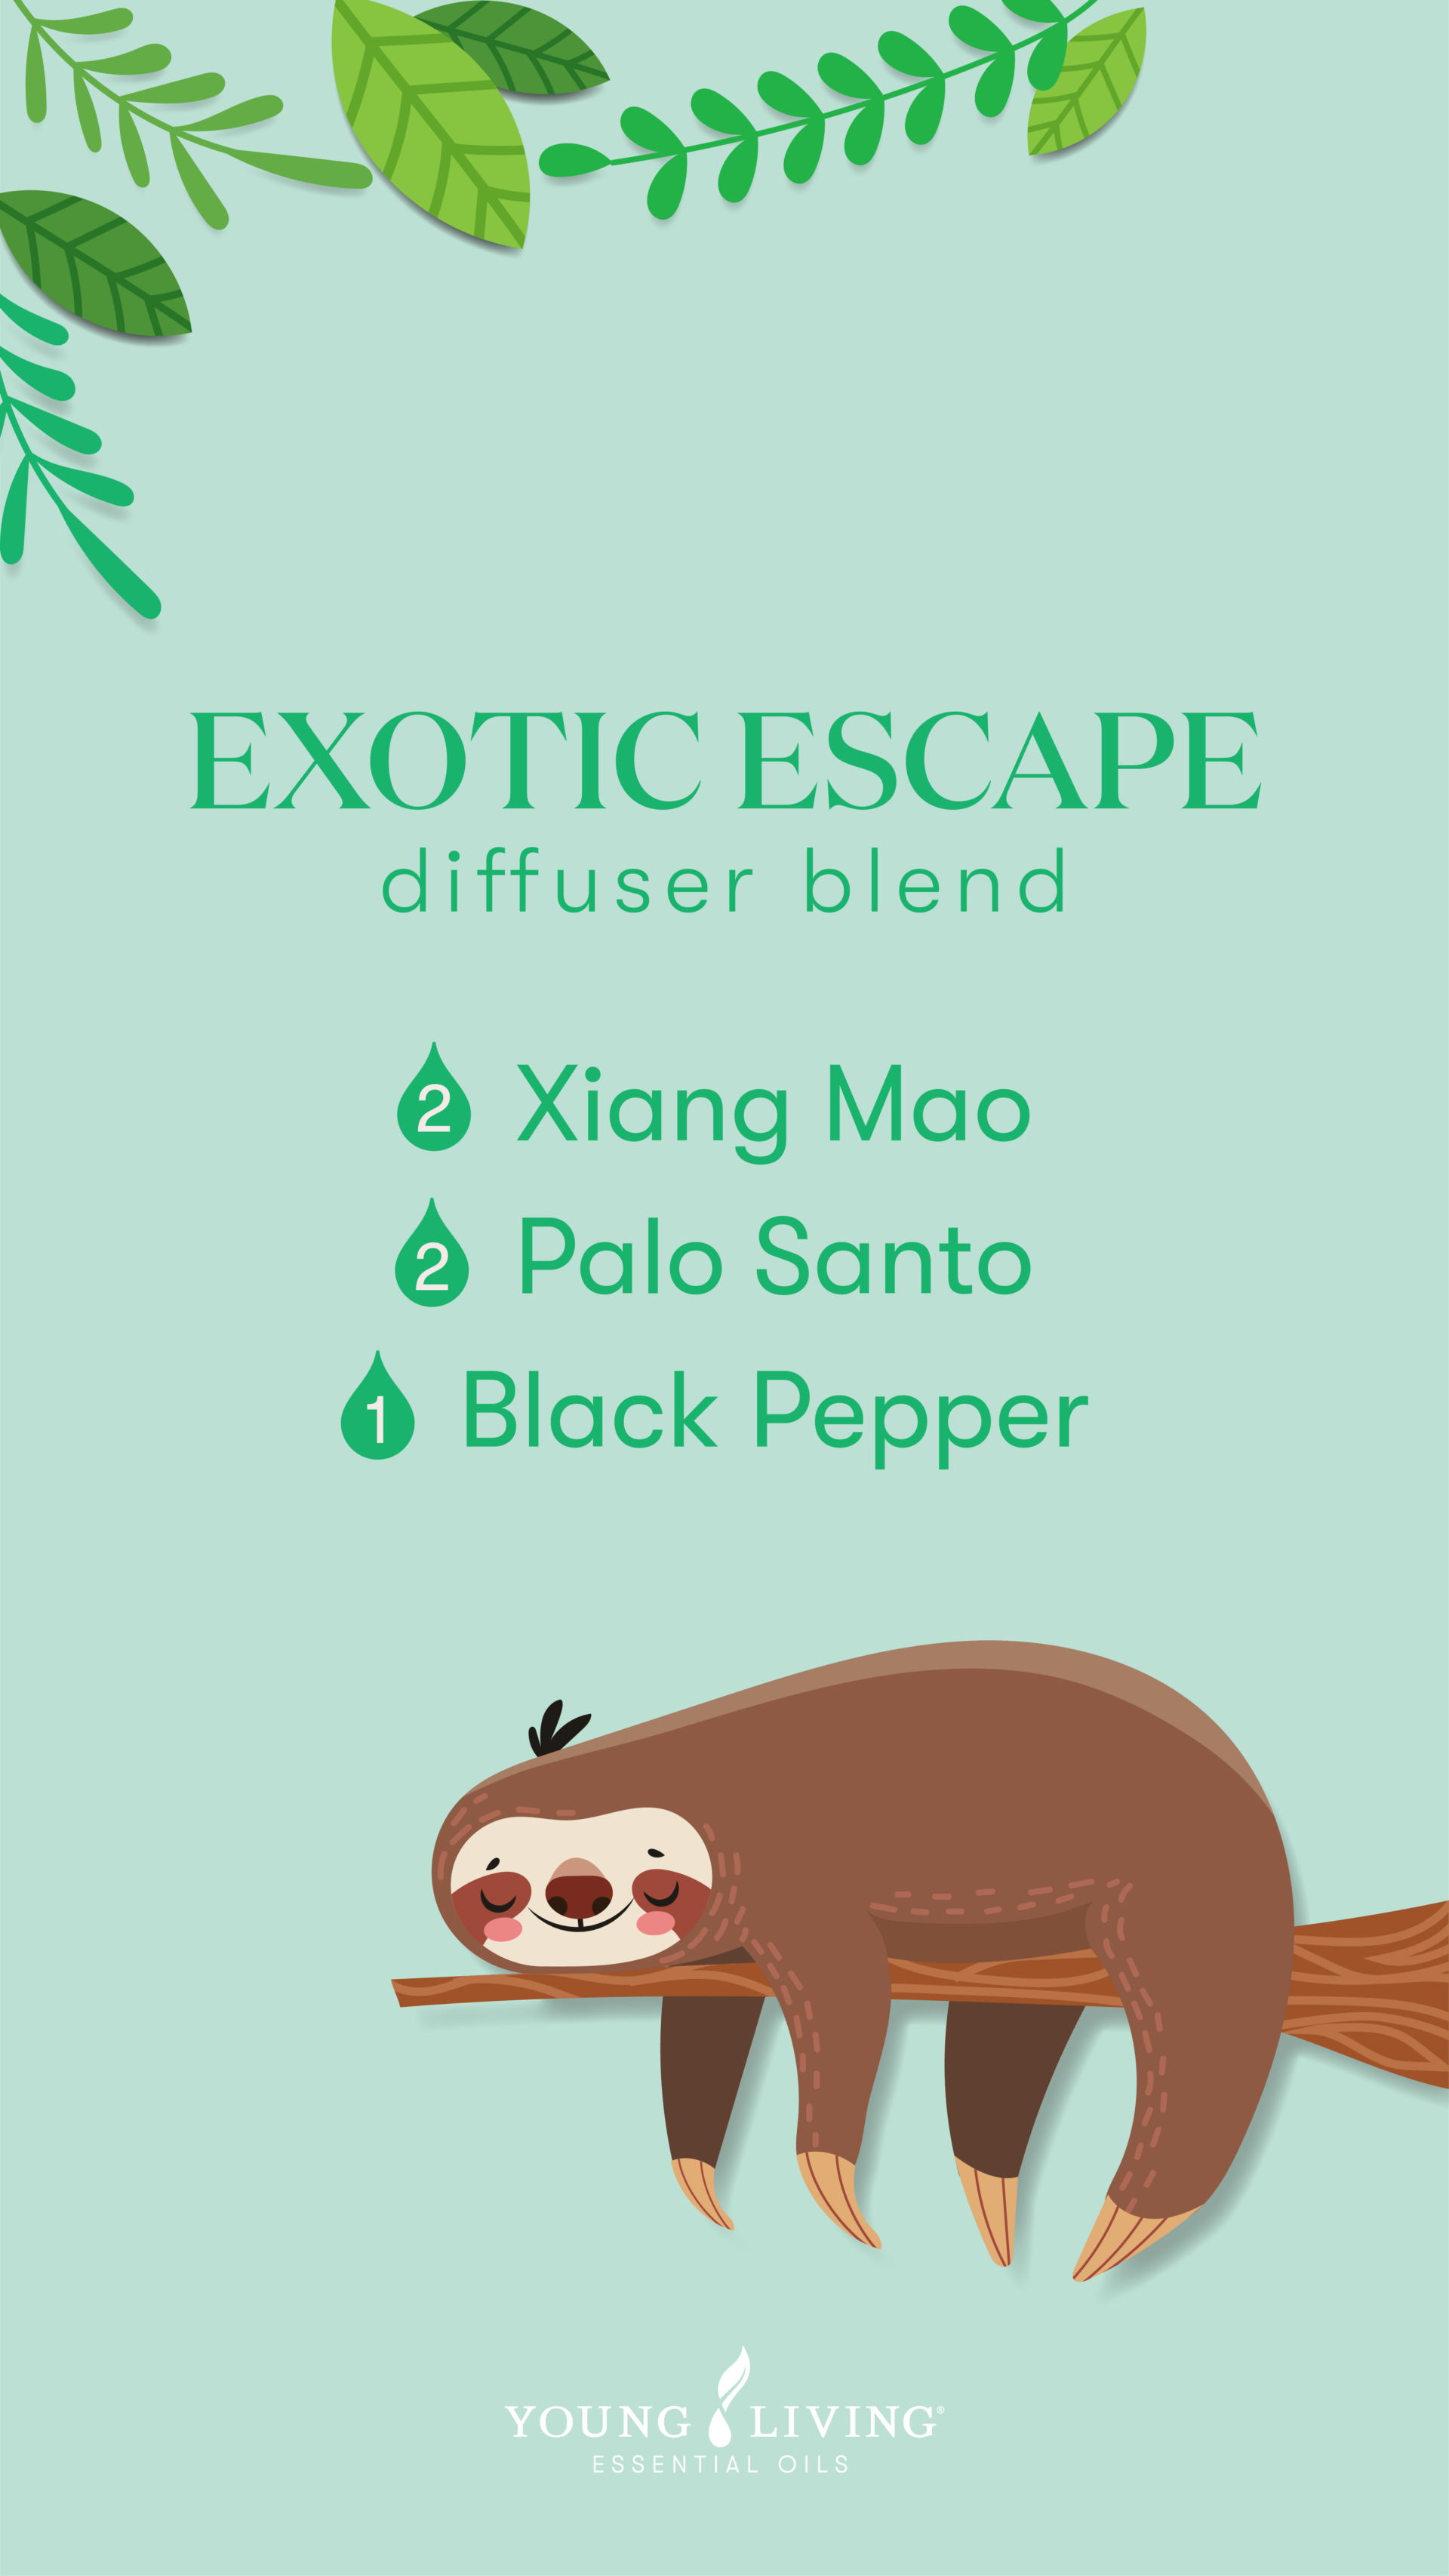 Exotic Escape diffuser blend - Young Living Lavender Life Blog 